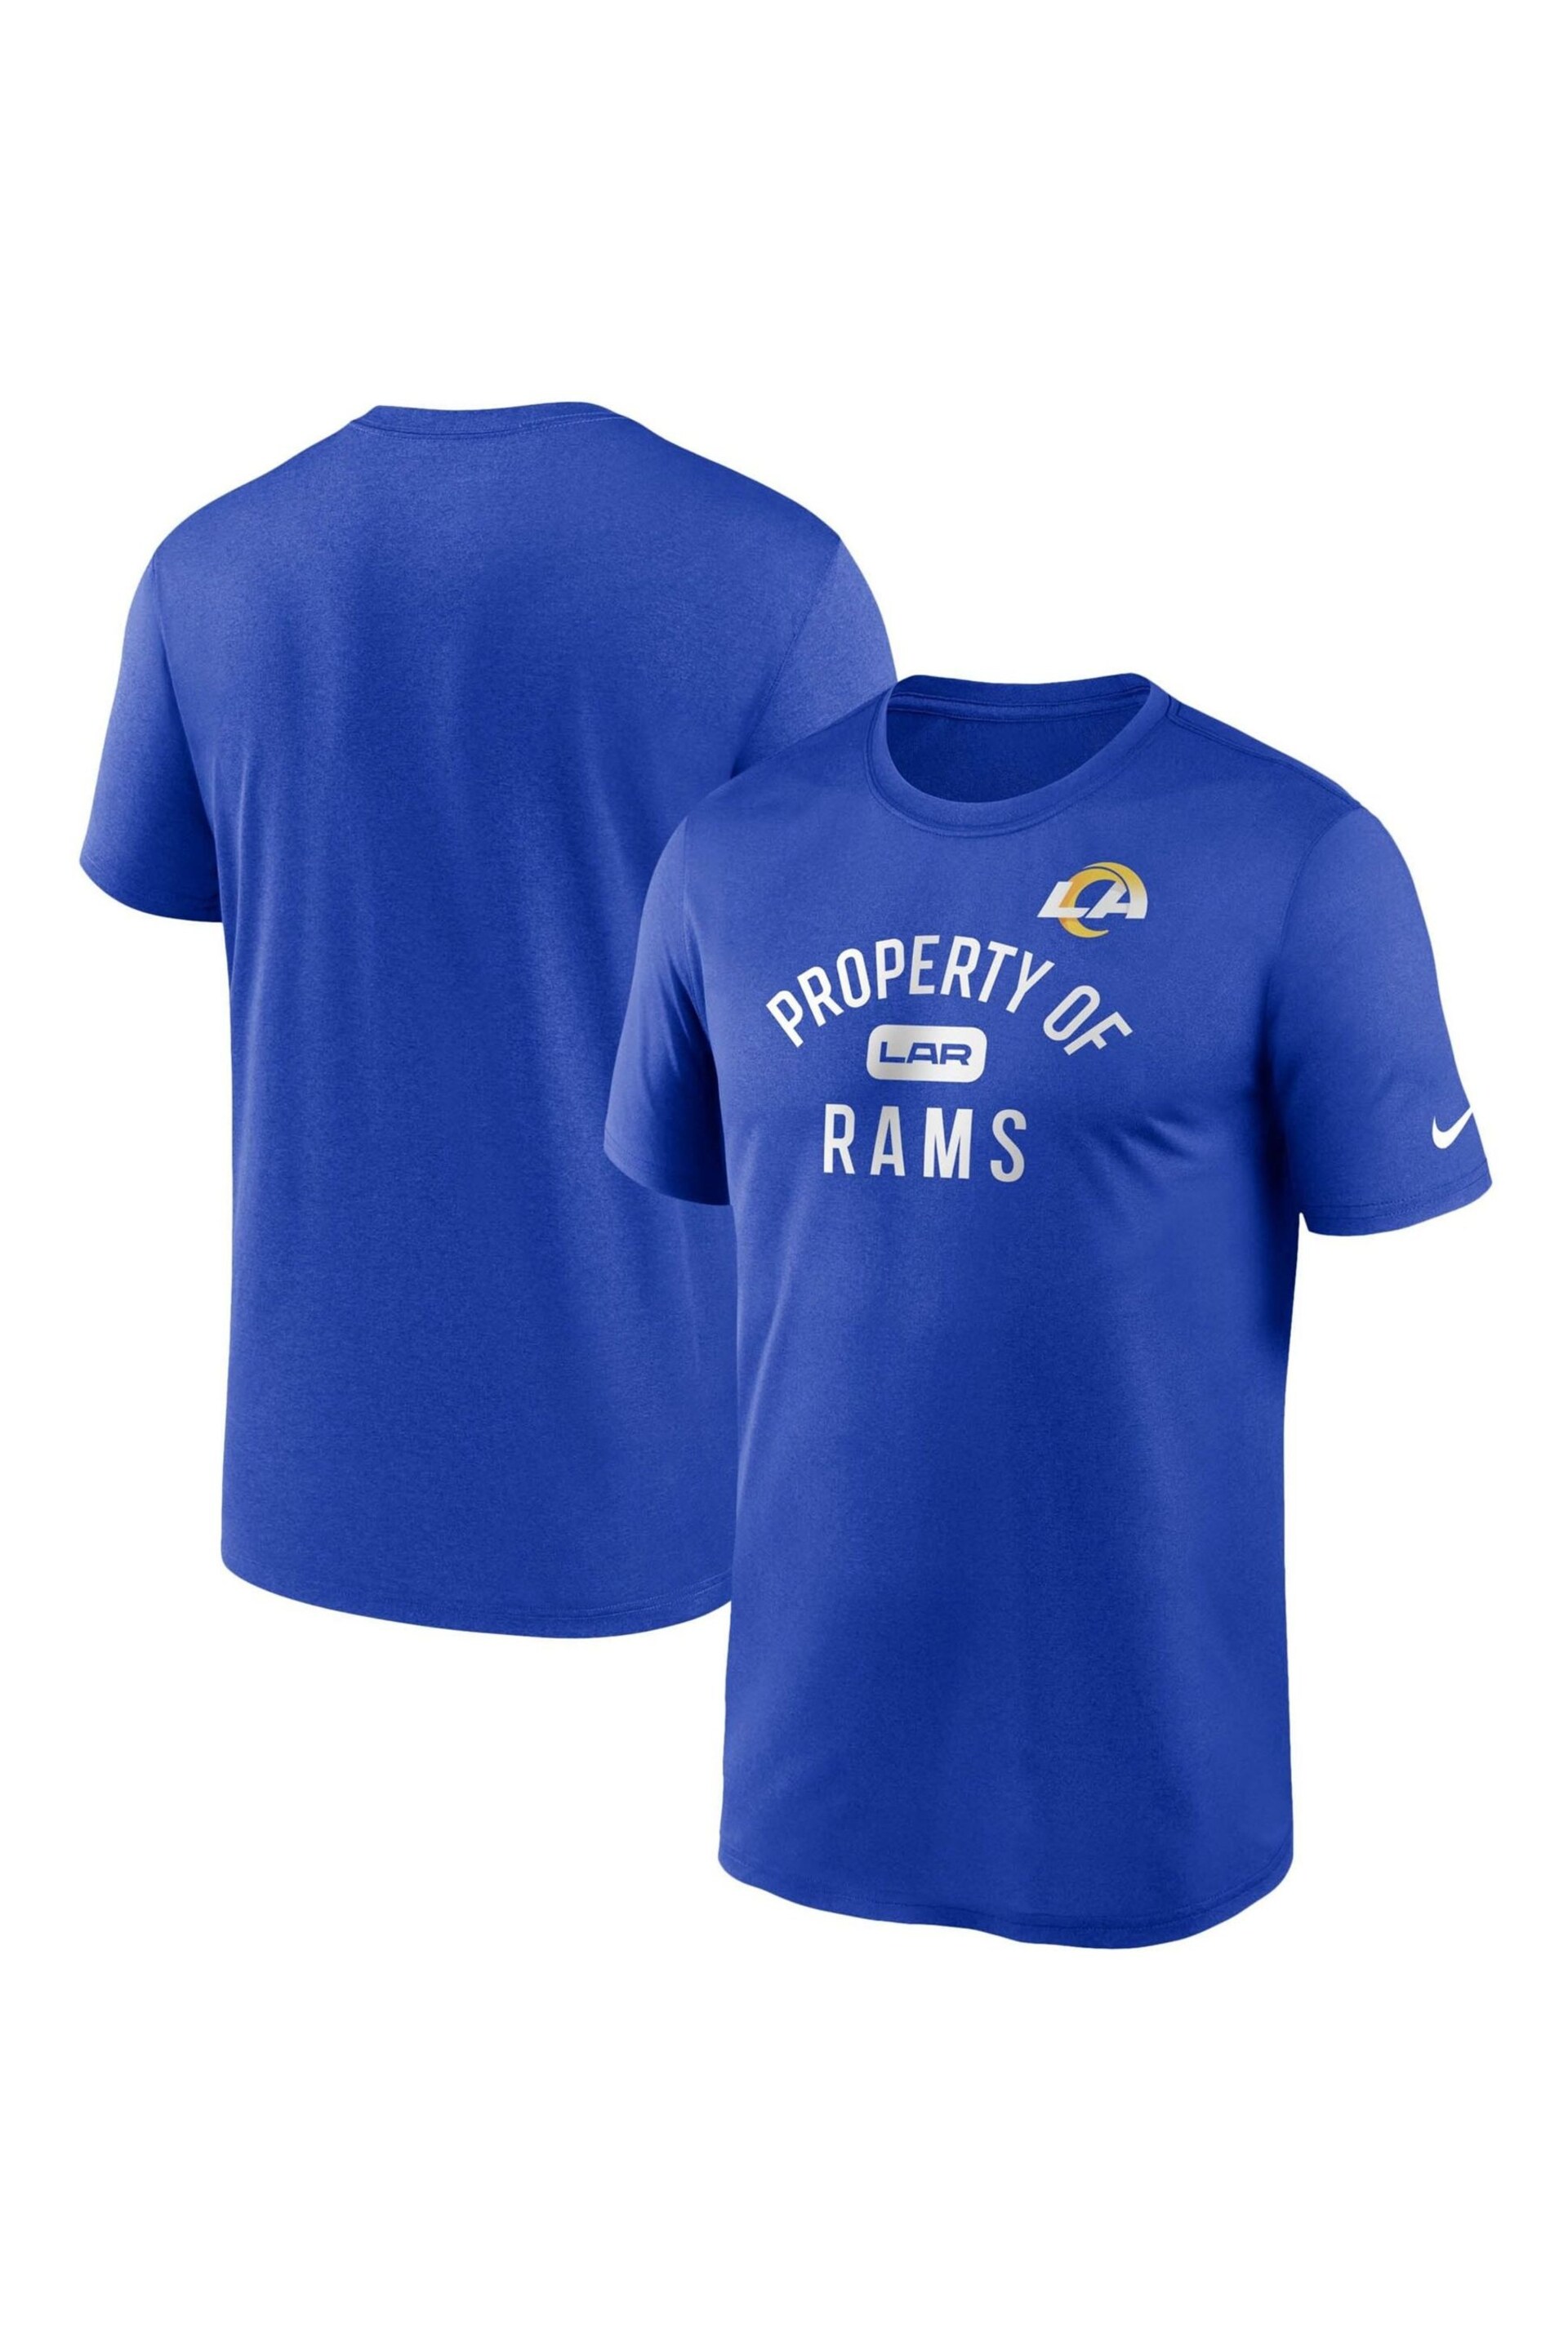 Nike Blue NFL Fanatics Los Angeles Rams Property T-Shirt - Image 1 of 3